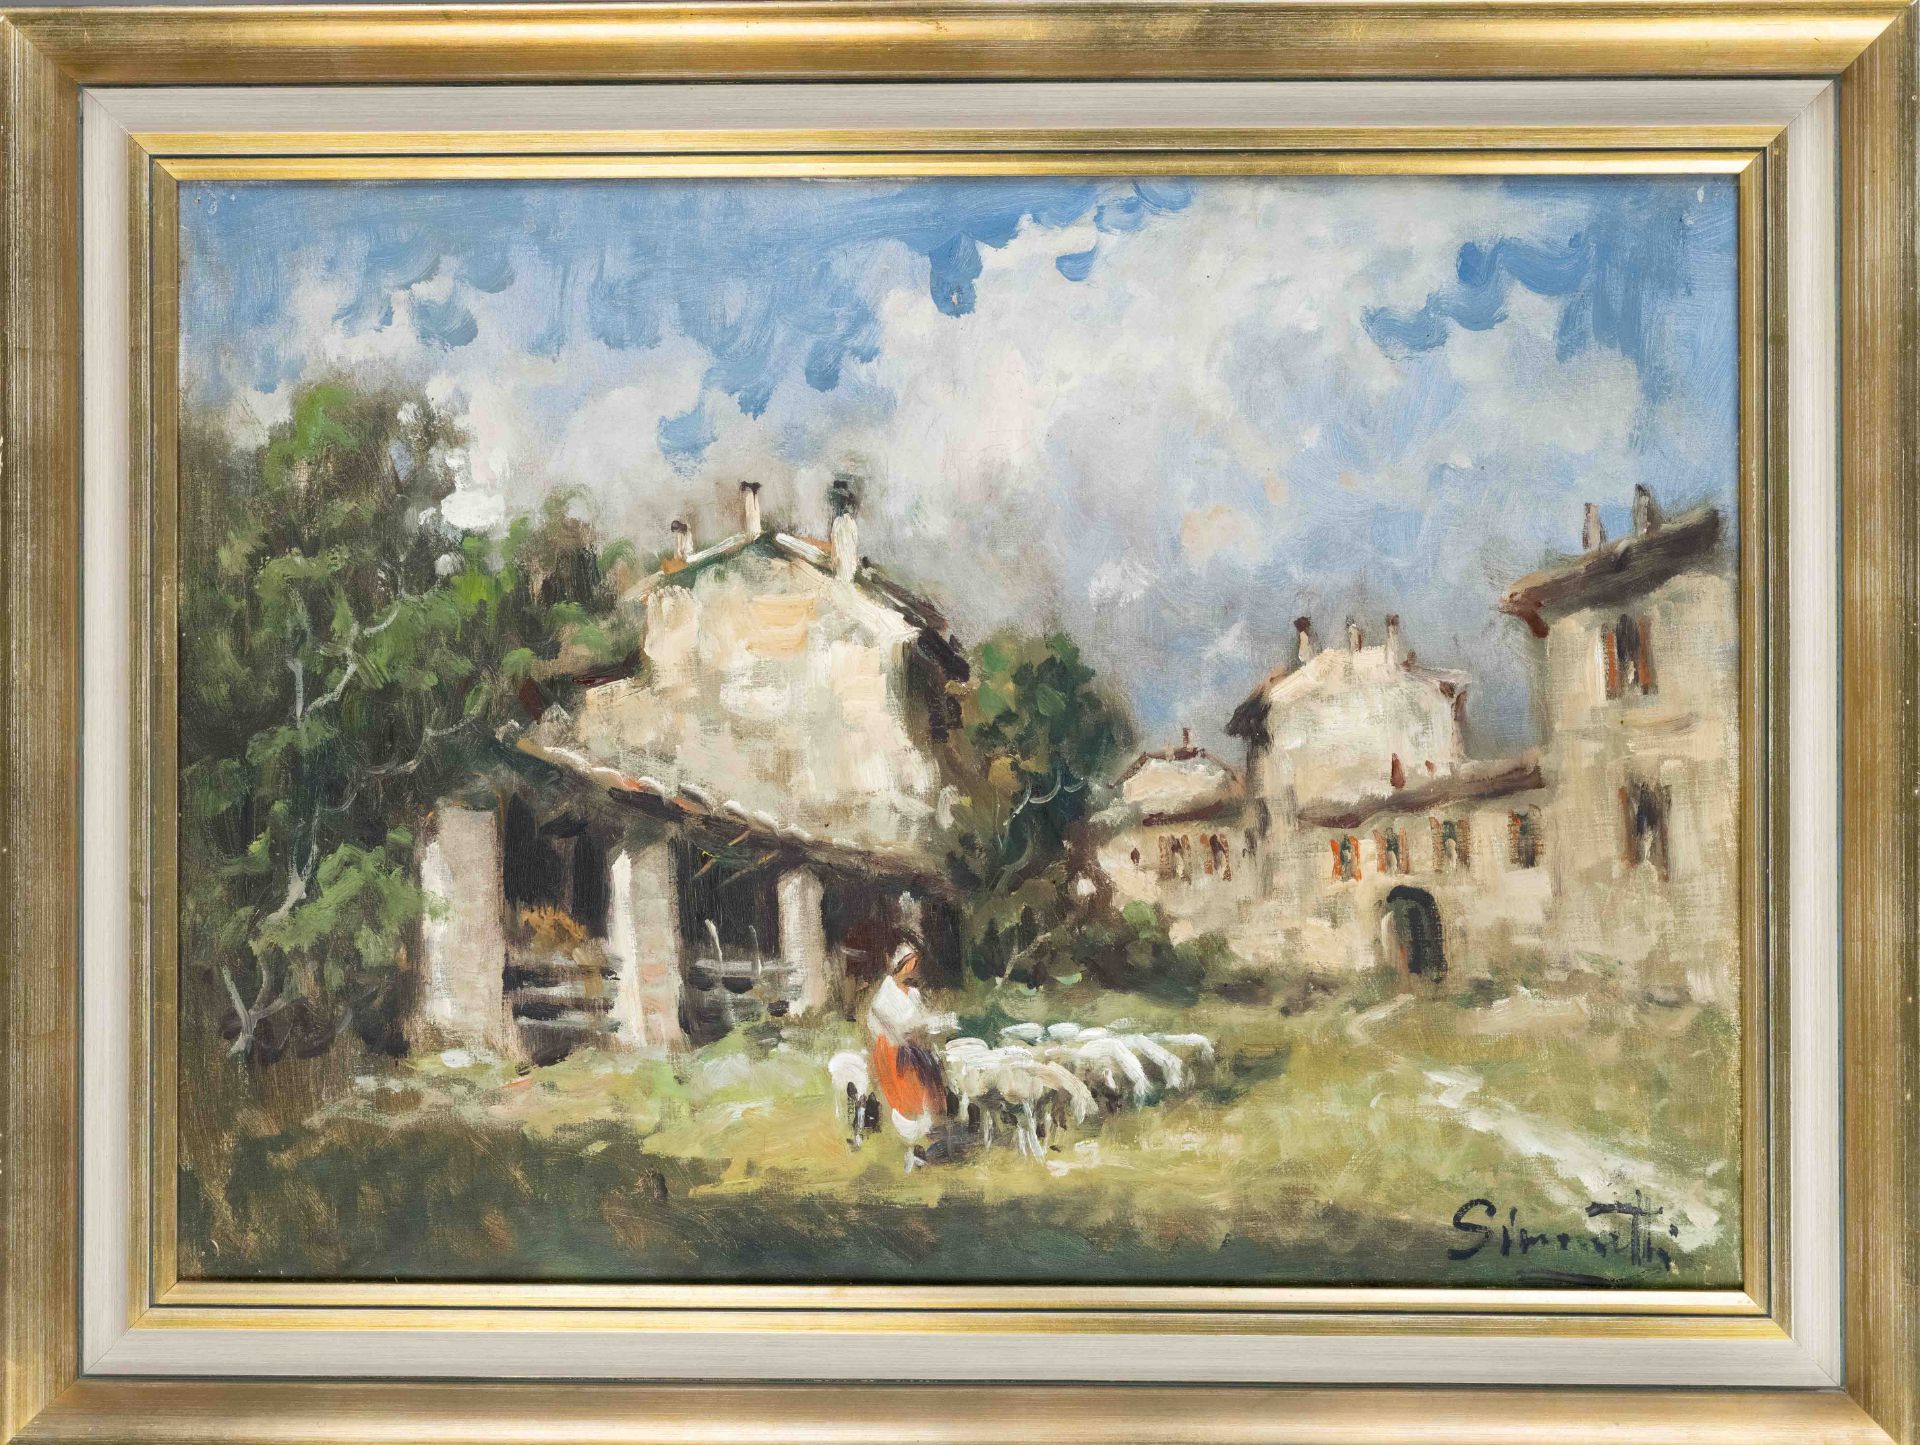 signed Simonetti, Italian painter 1st half 20th century, ''Motivo Rustico'', shepherdess with herd